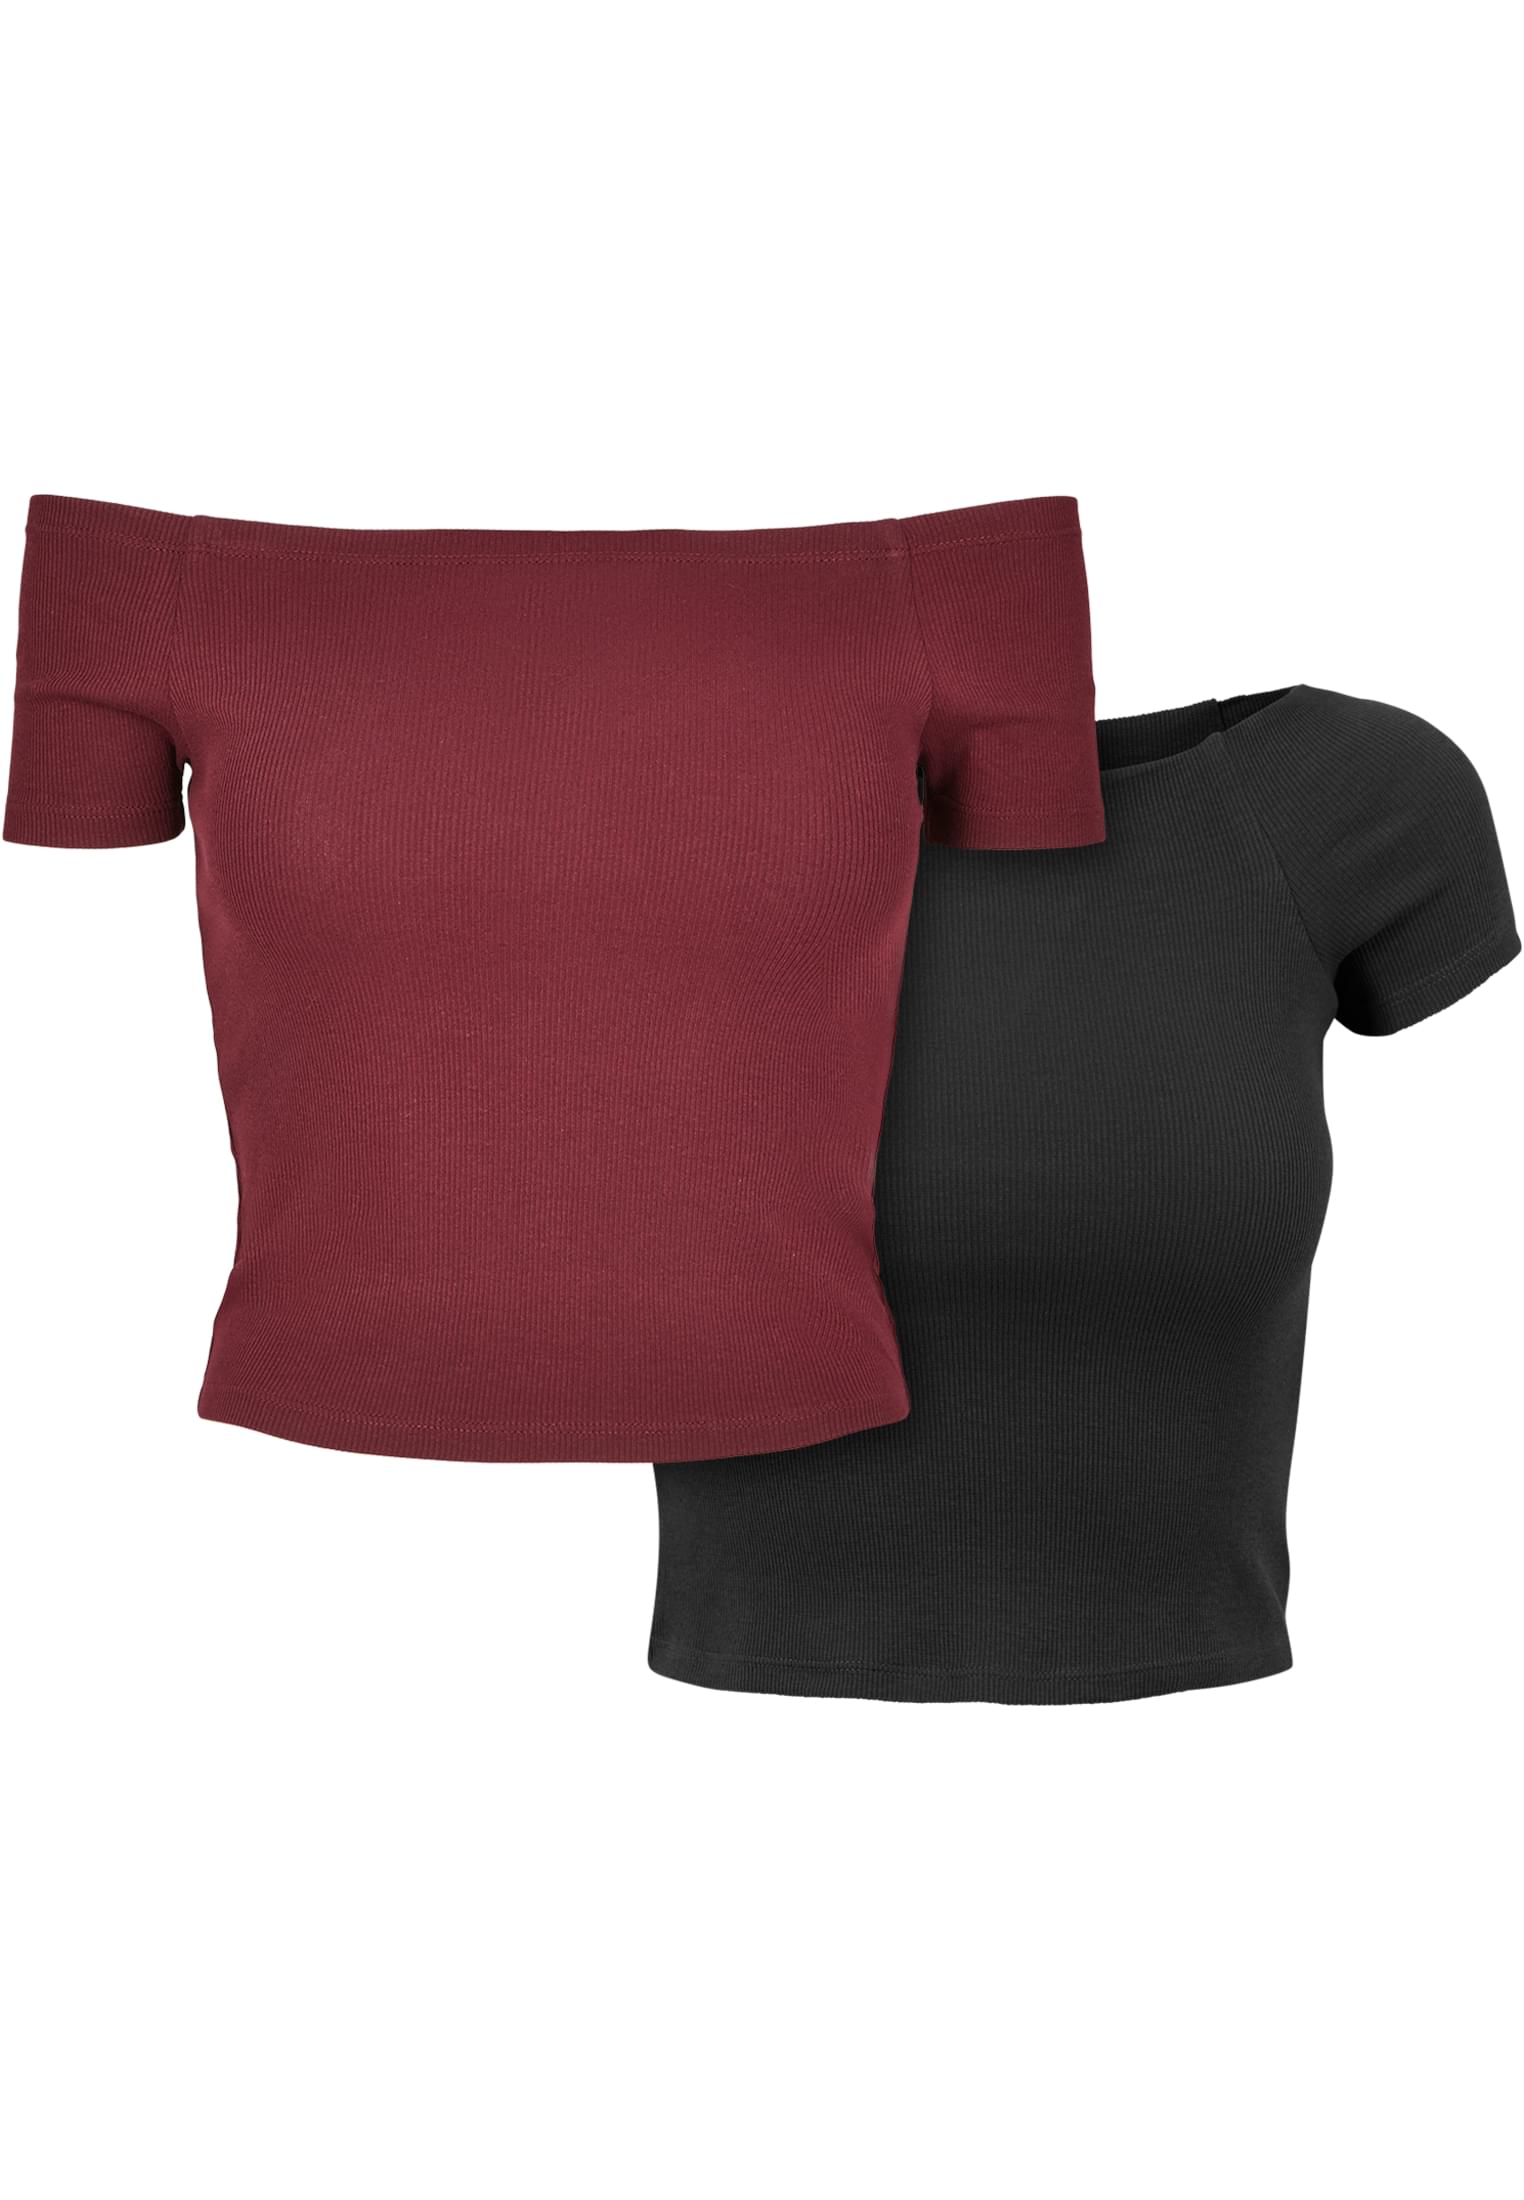 Women's T-Shirt Off Shoulder Rib Tee 2-Pack Redburgundy+Black